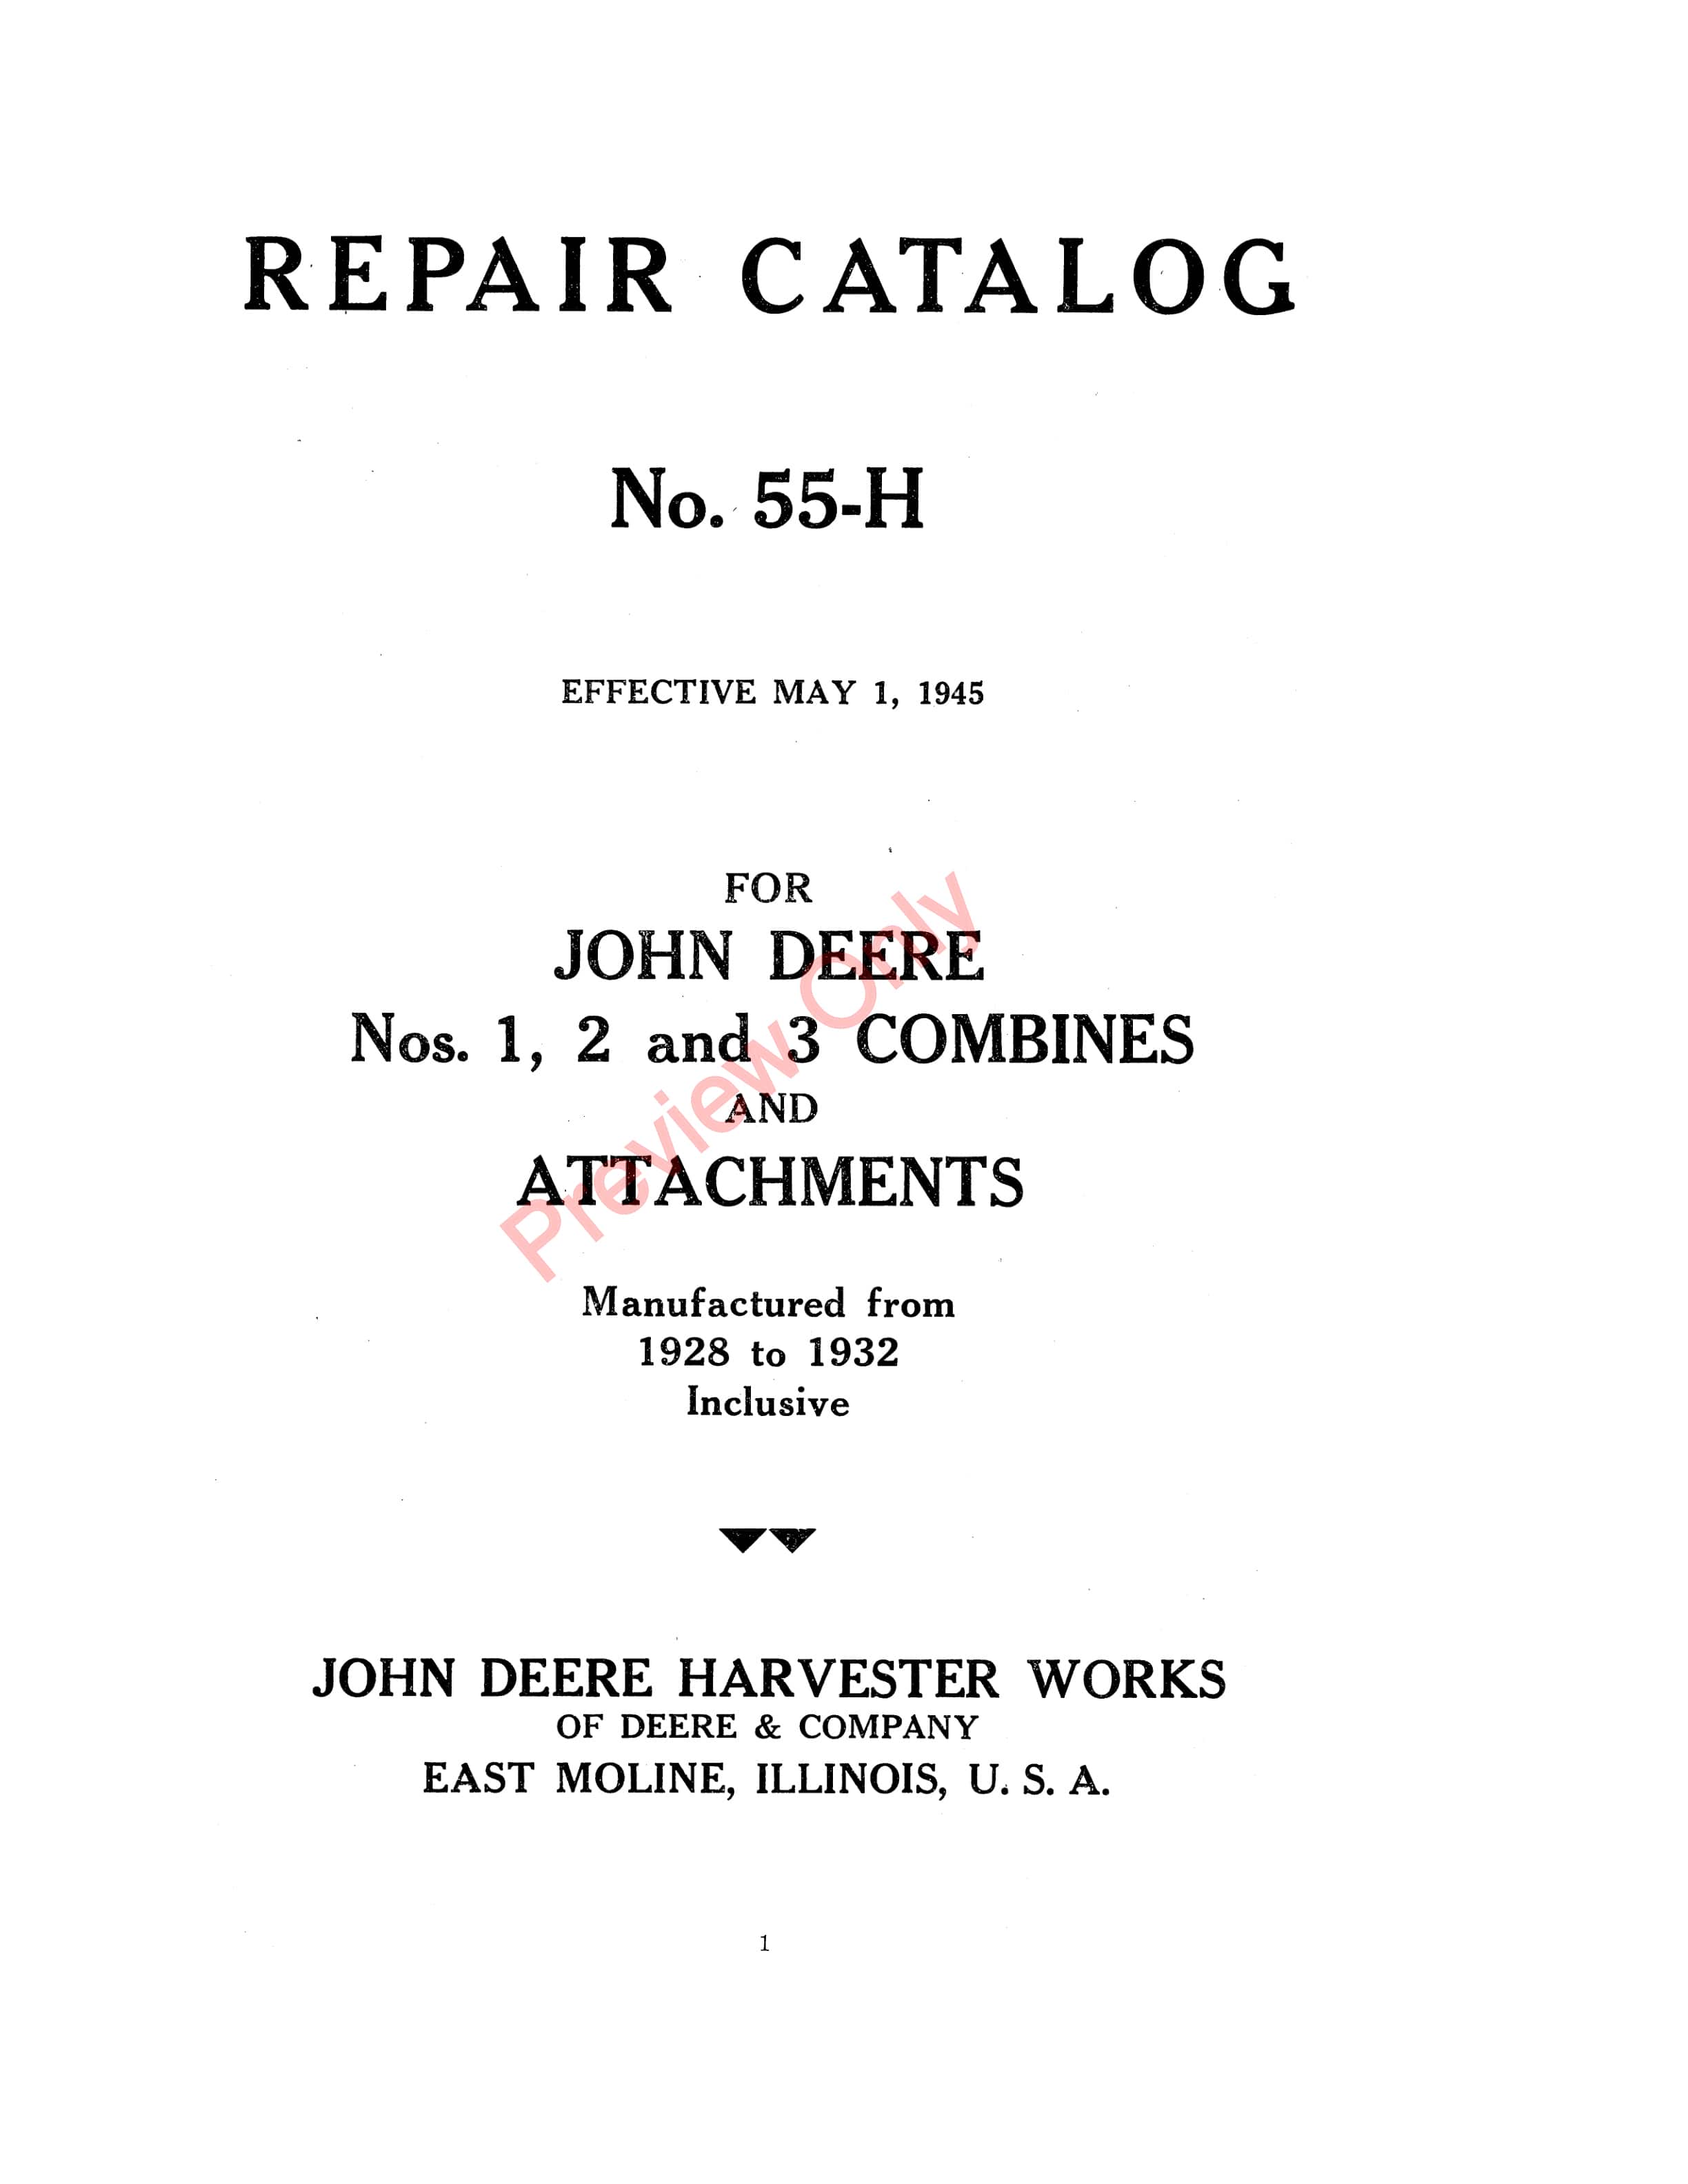 John Deere No. 1 2 And 3 Combines WAttachments Parts Catalog CAT55H 01MAY45 5